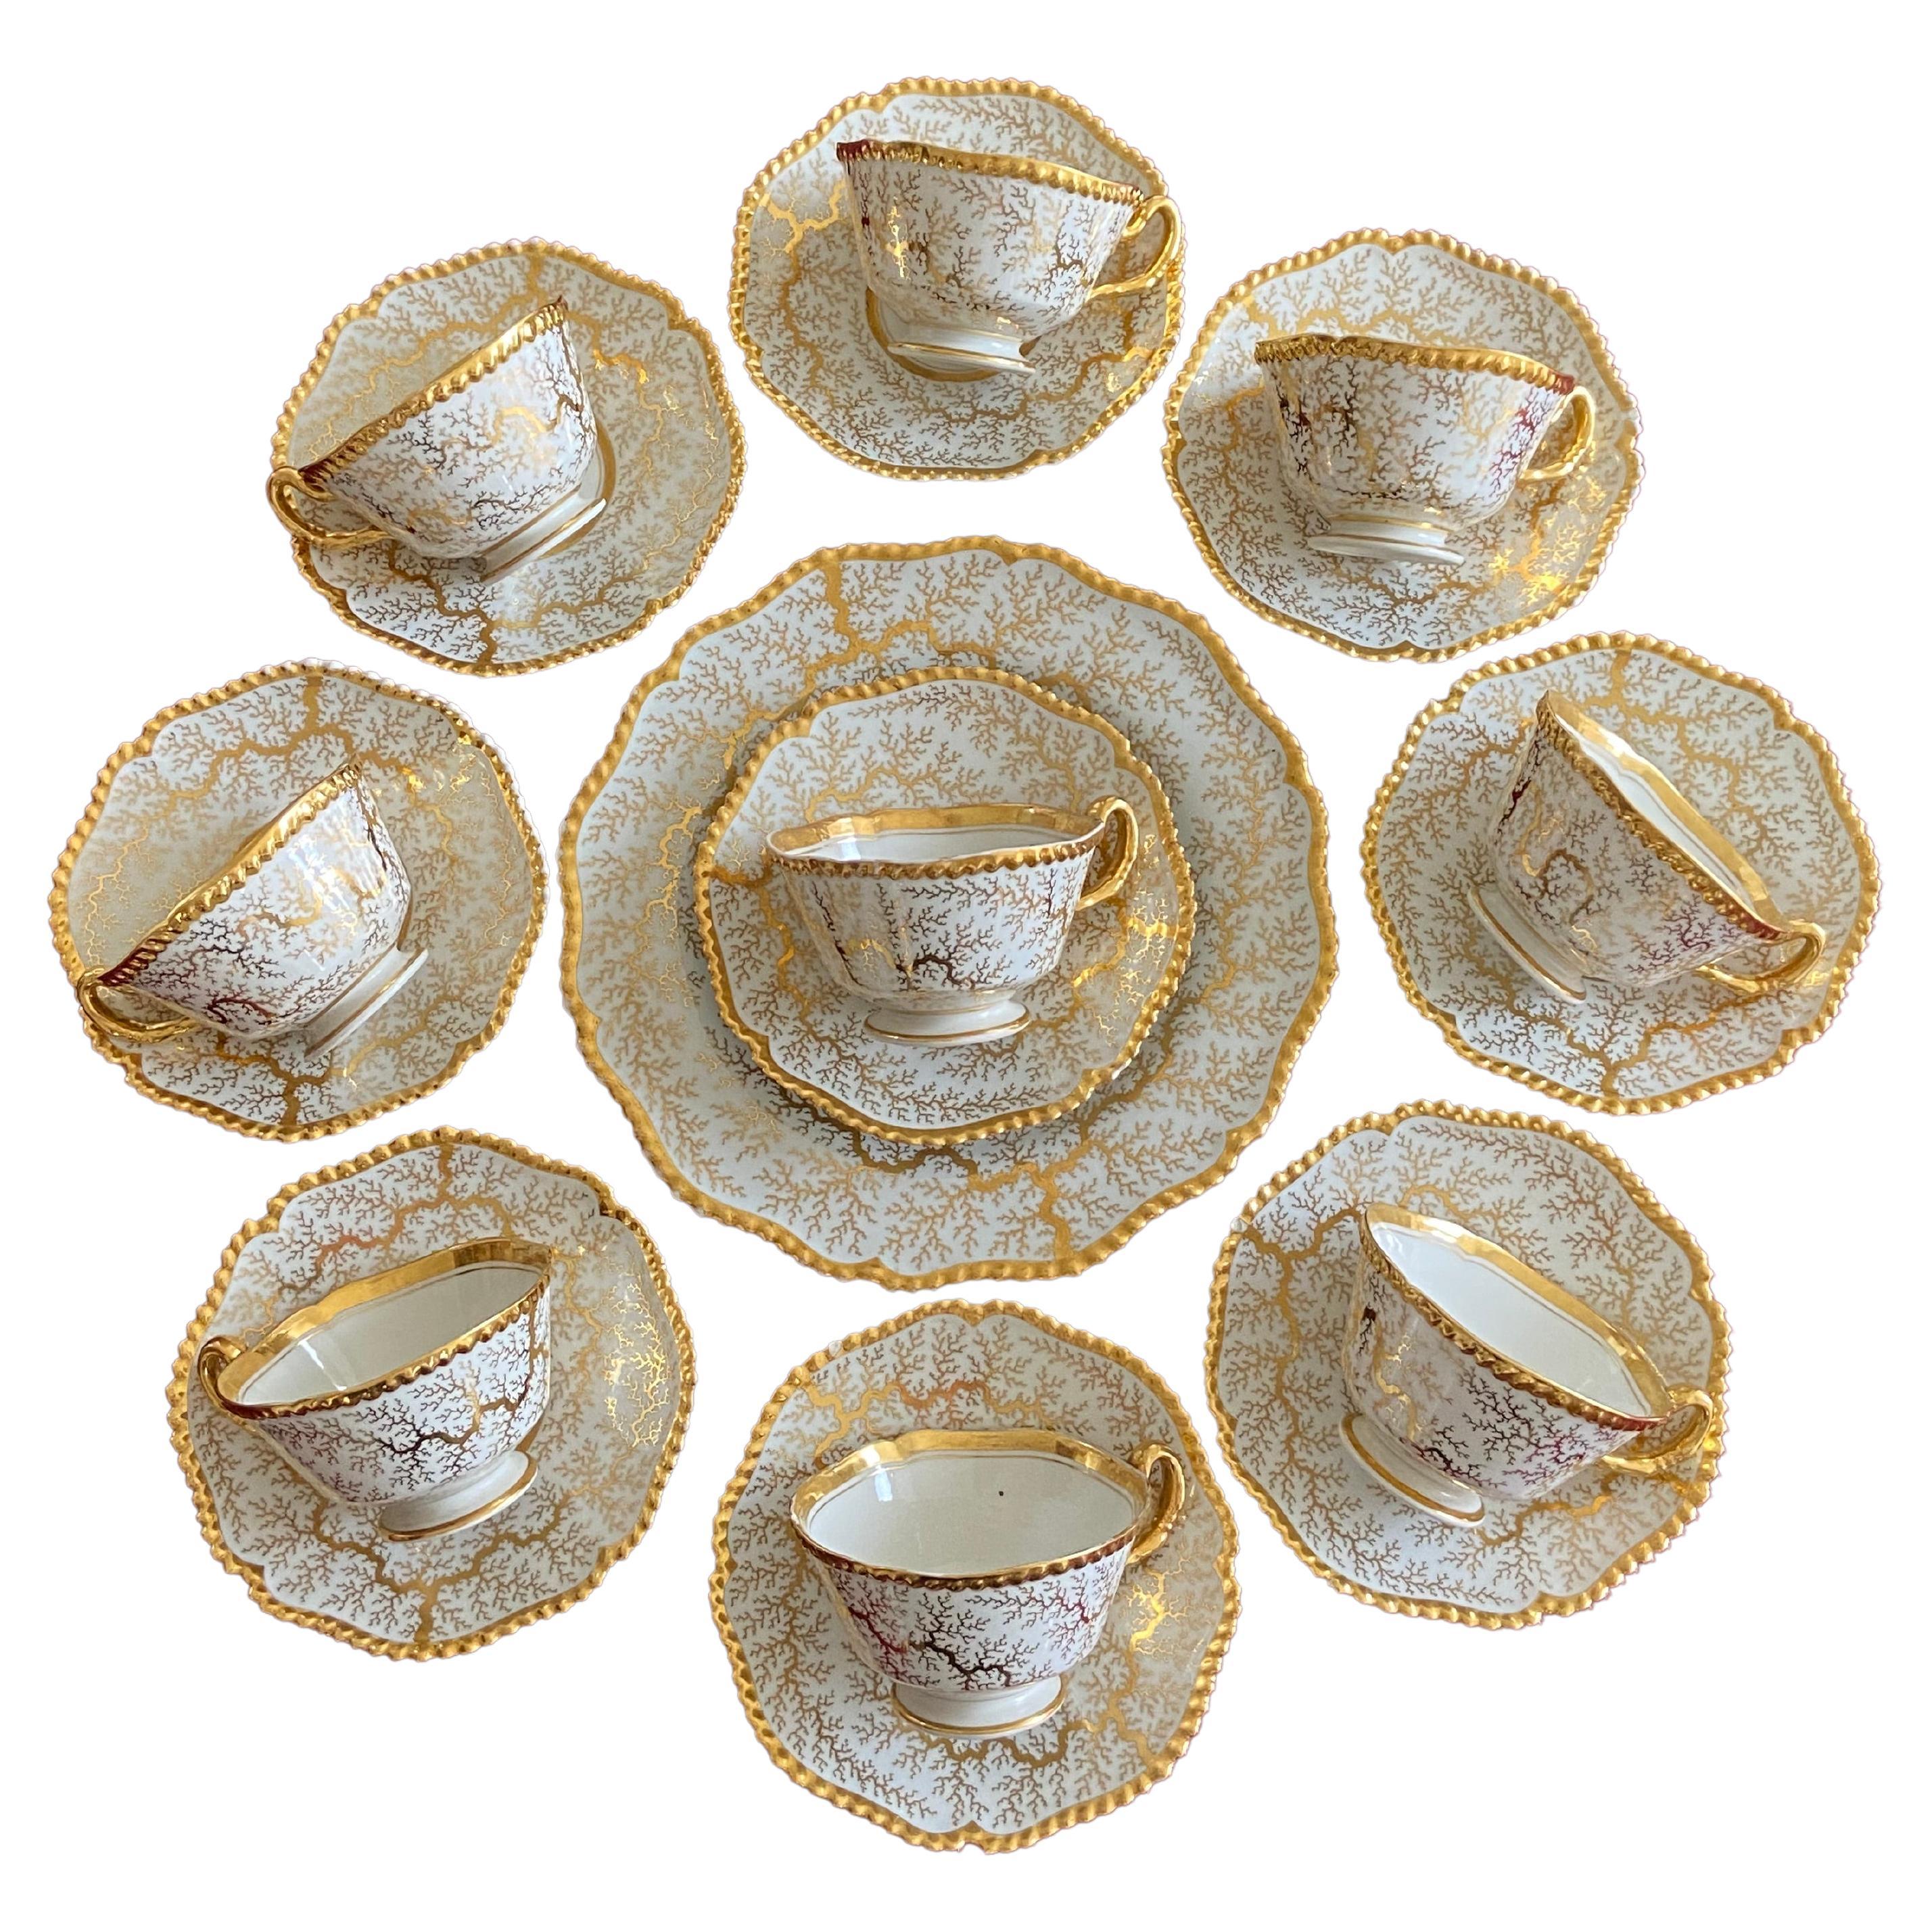 Flight Barr & Barr Worcester Porcelain Part Tea Set C.1820-1825